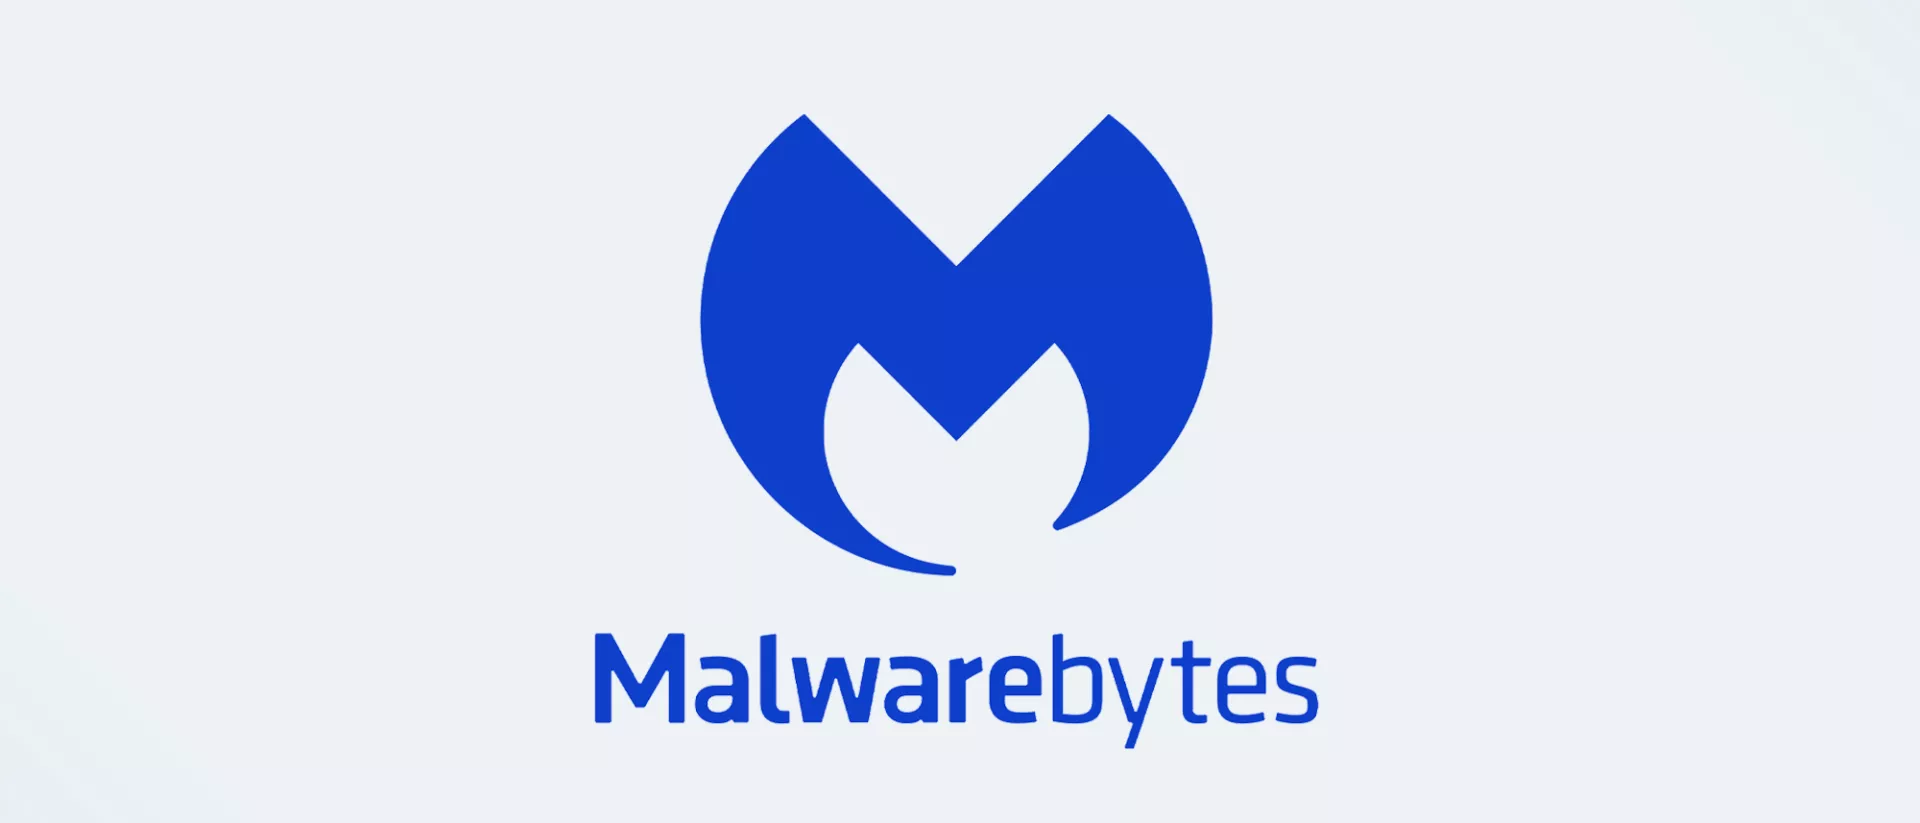 malwarebytes Reviews